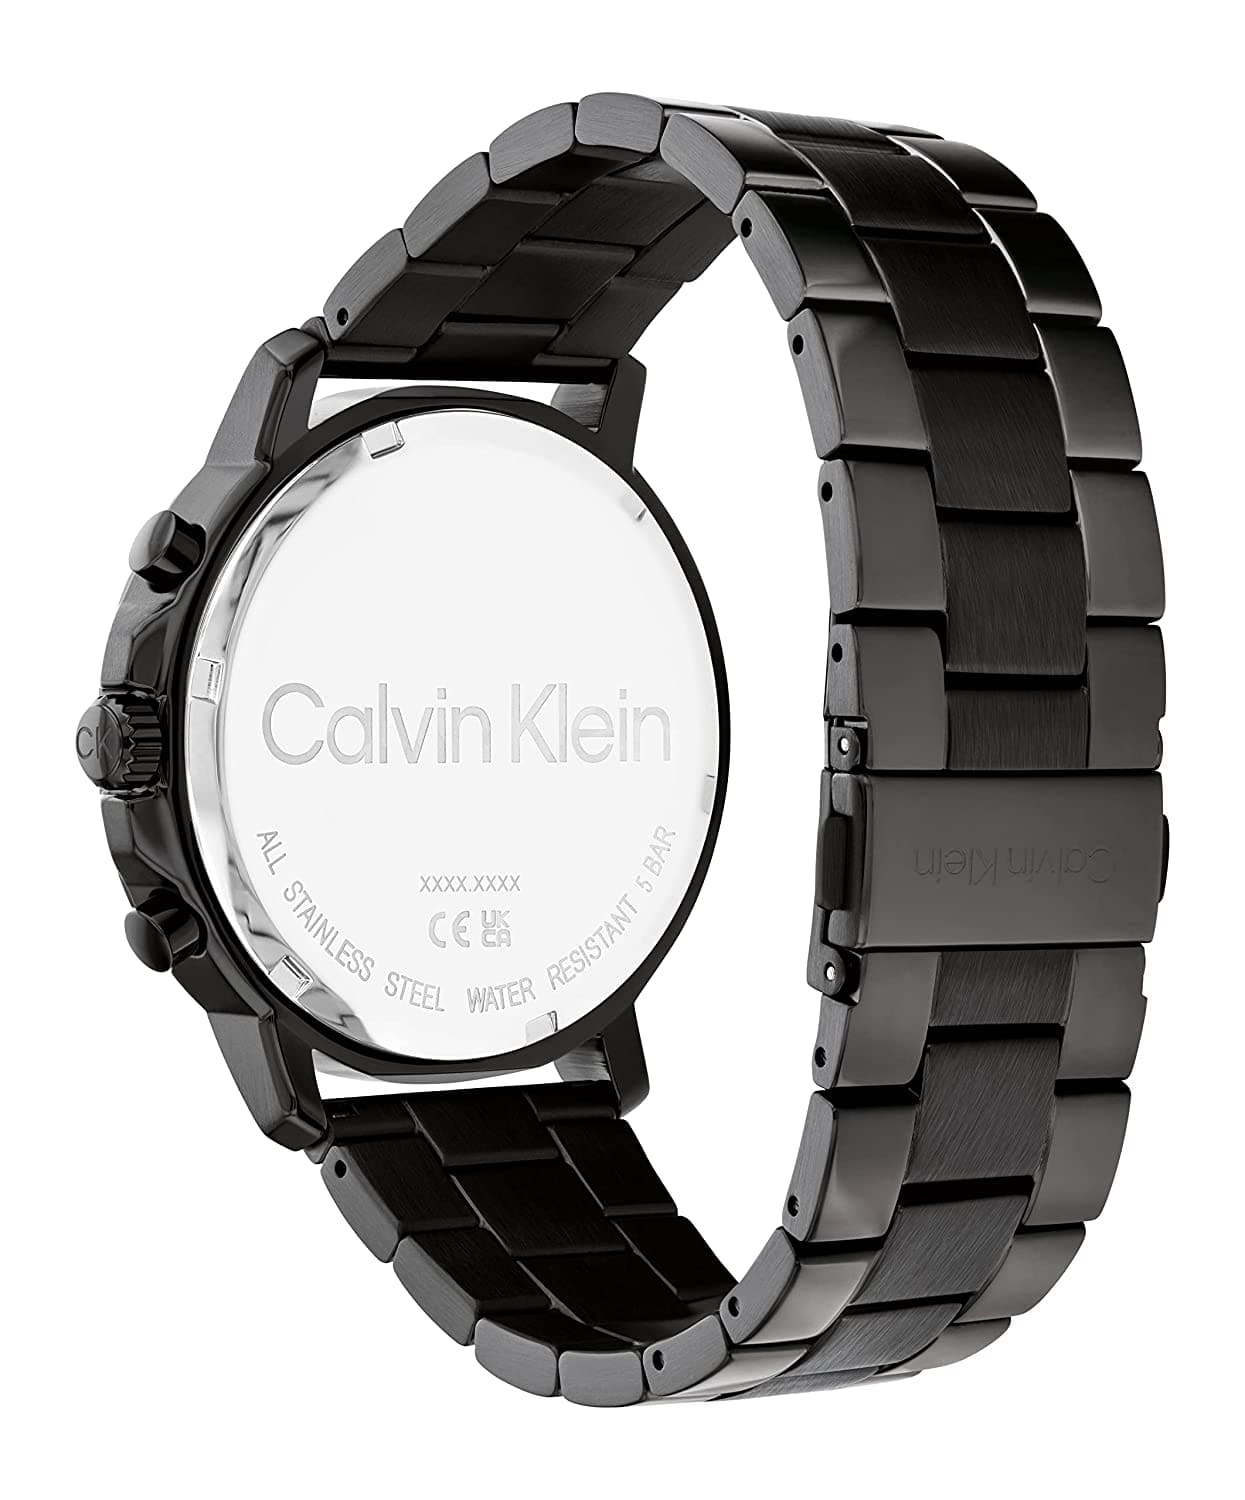 CALVIN KLEIN Gauge Sport Chronograph Watch for Men 25200069 - Kamal Watch Company